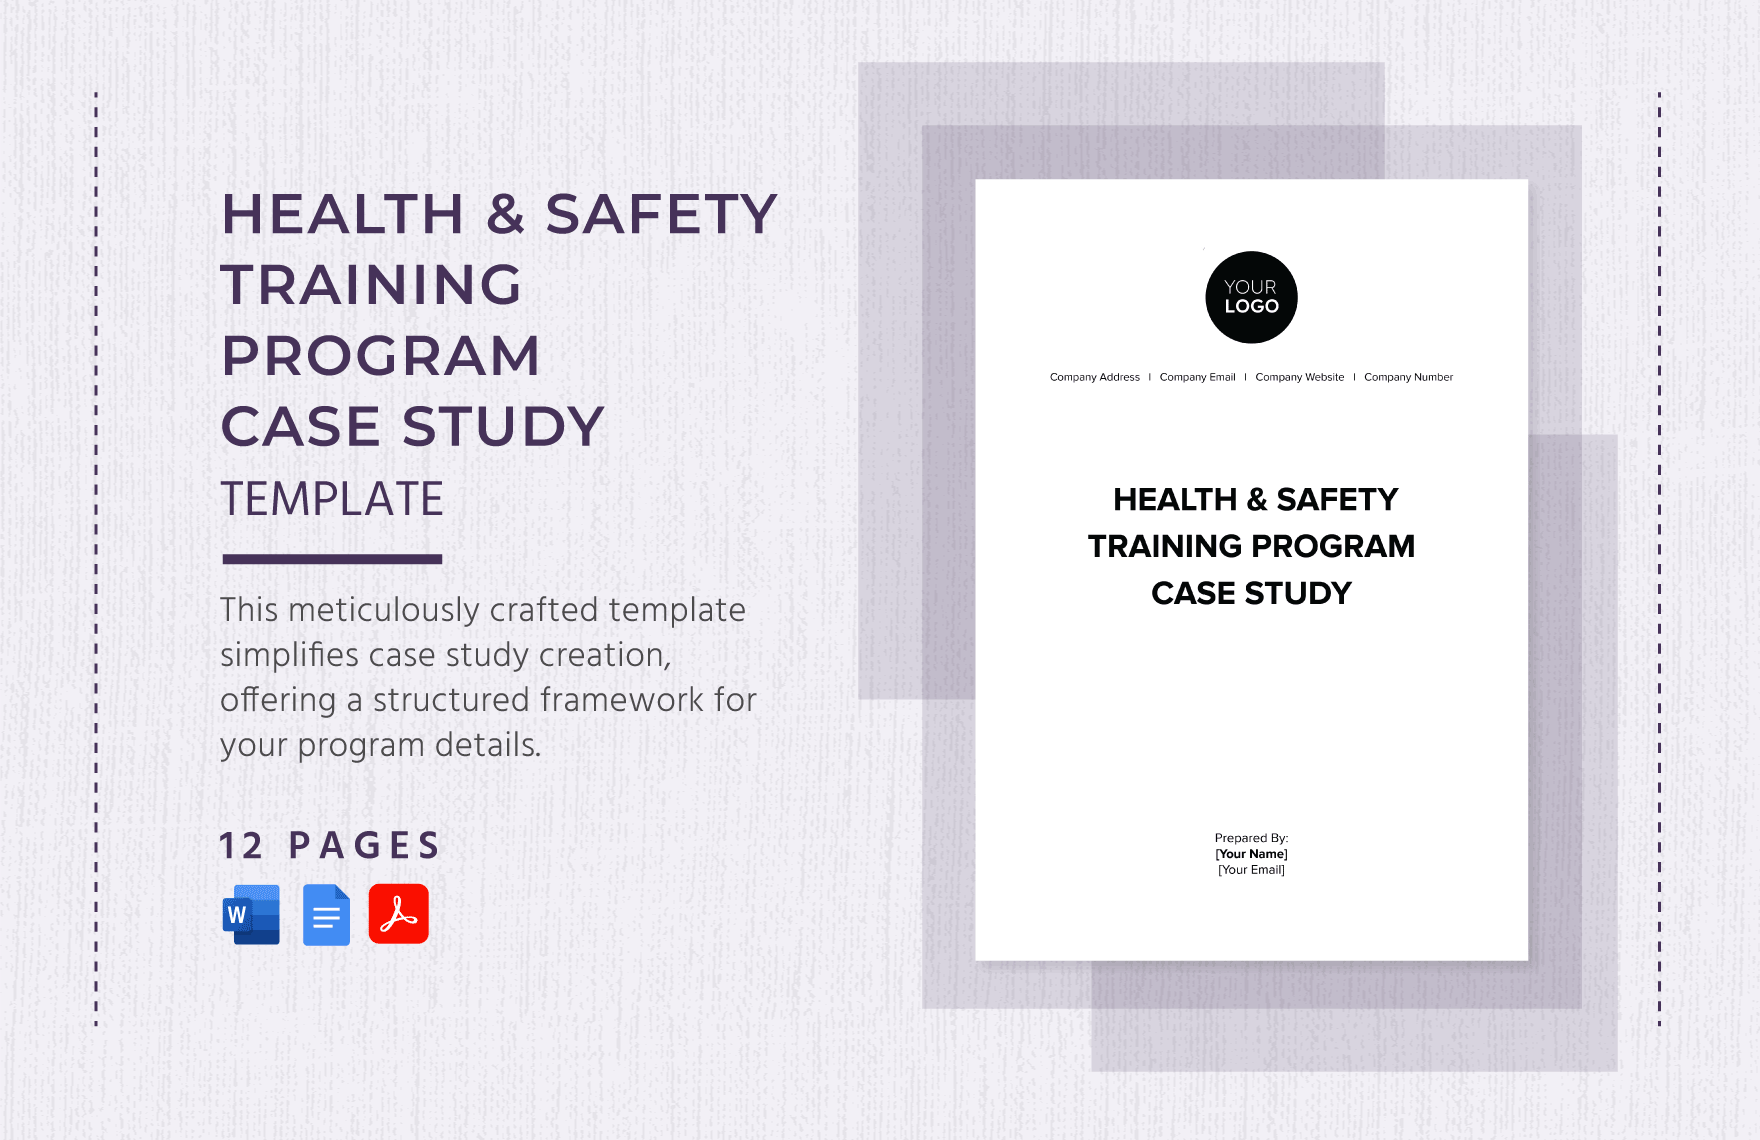 Health & Safety Training Program Case Study Template in Word, Google Docs, PDF